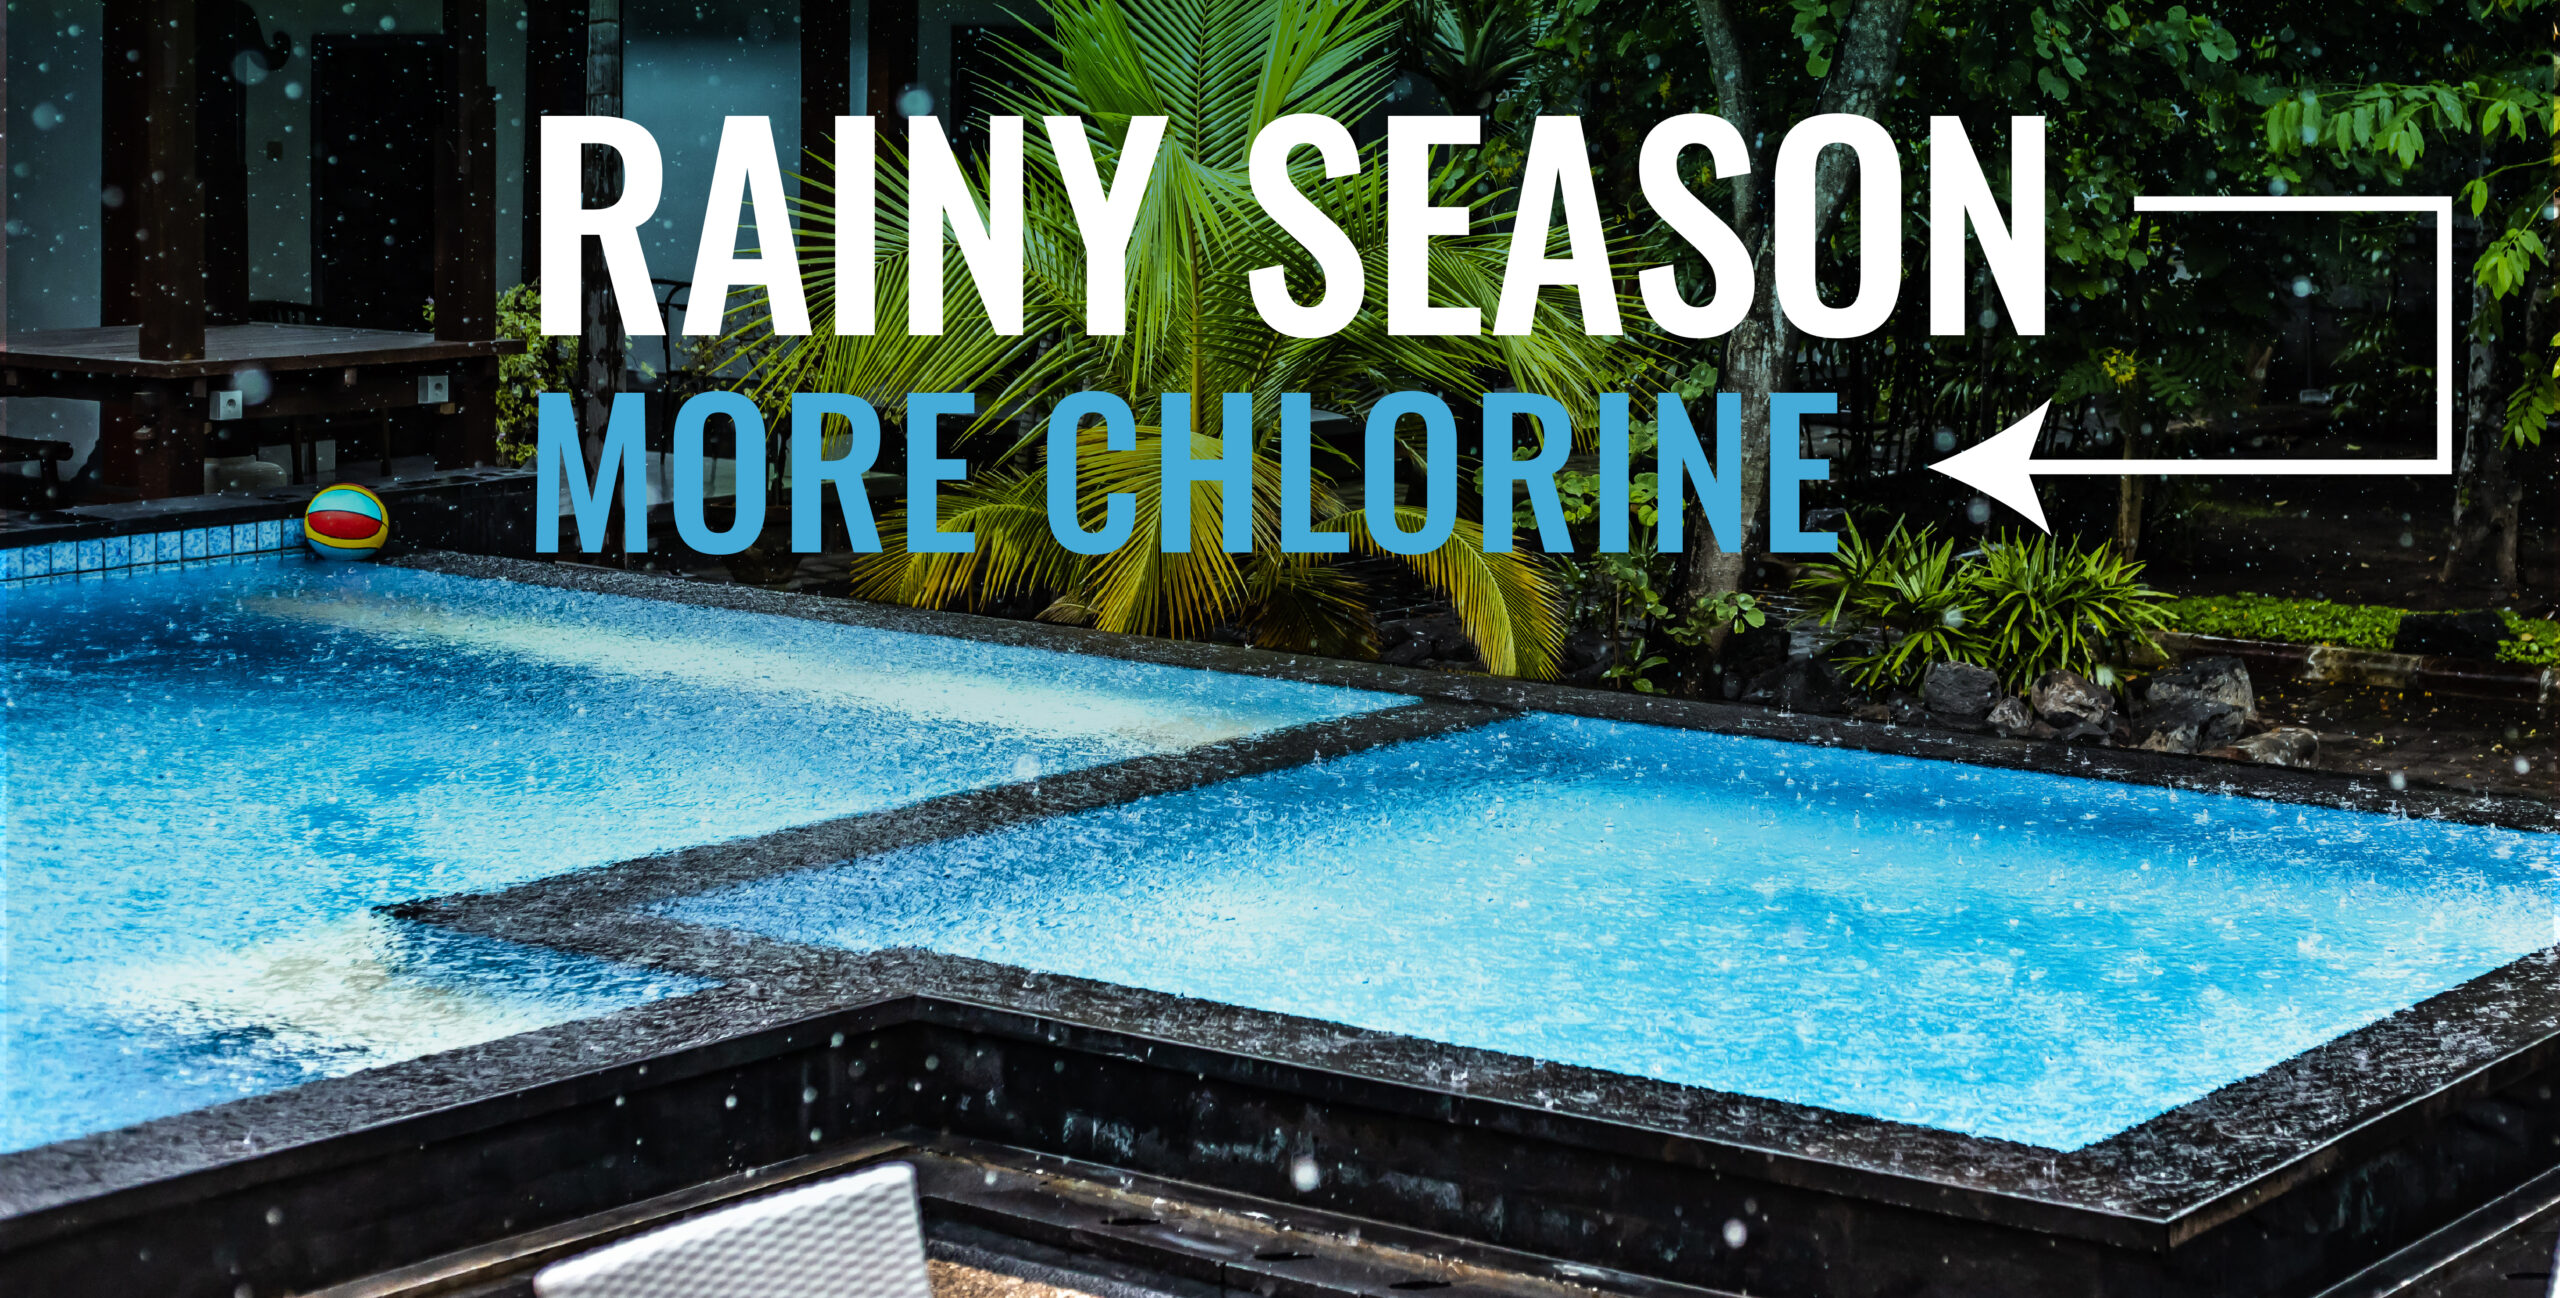 Rainy season more chlorine swimming pool balance salt chlorine generator cost saving maintenance AutoPilot AquaCal rainwater